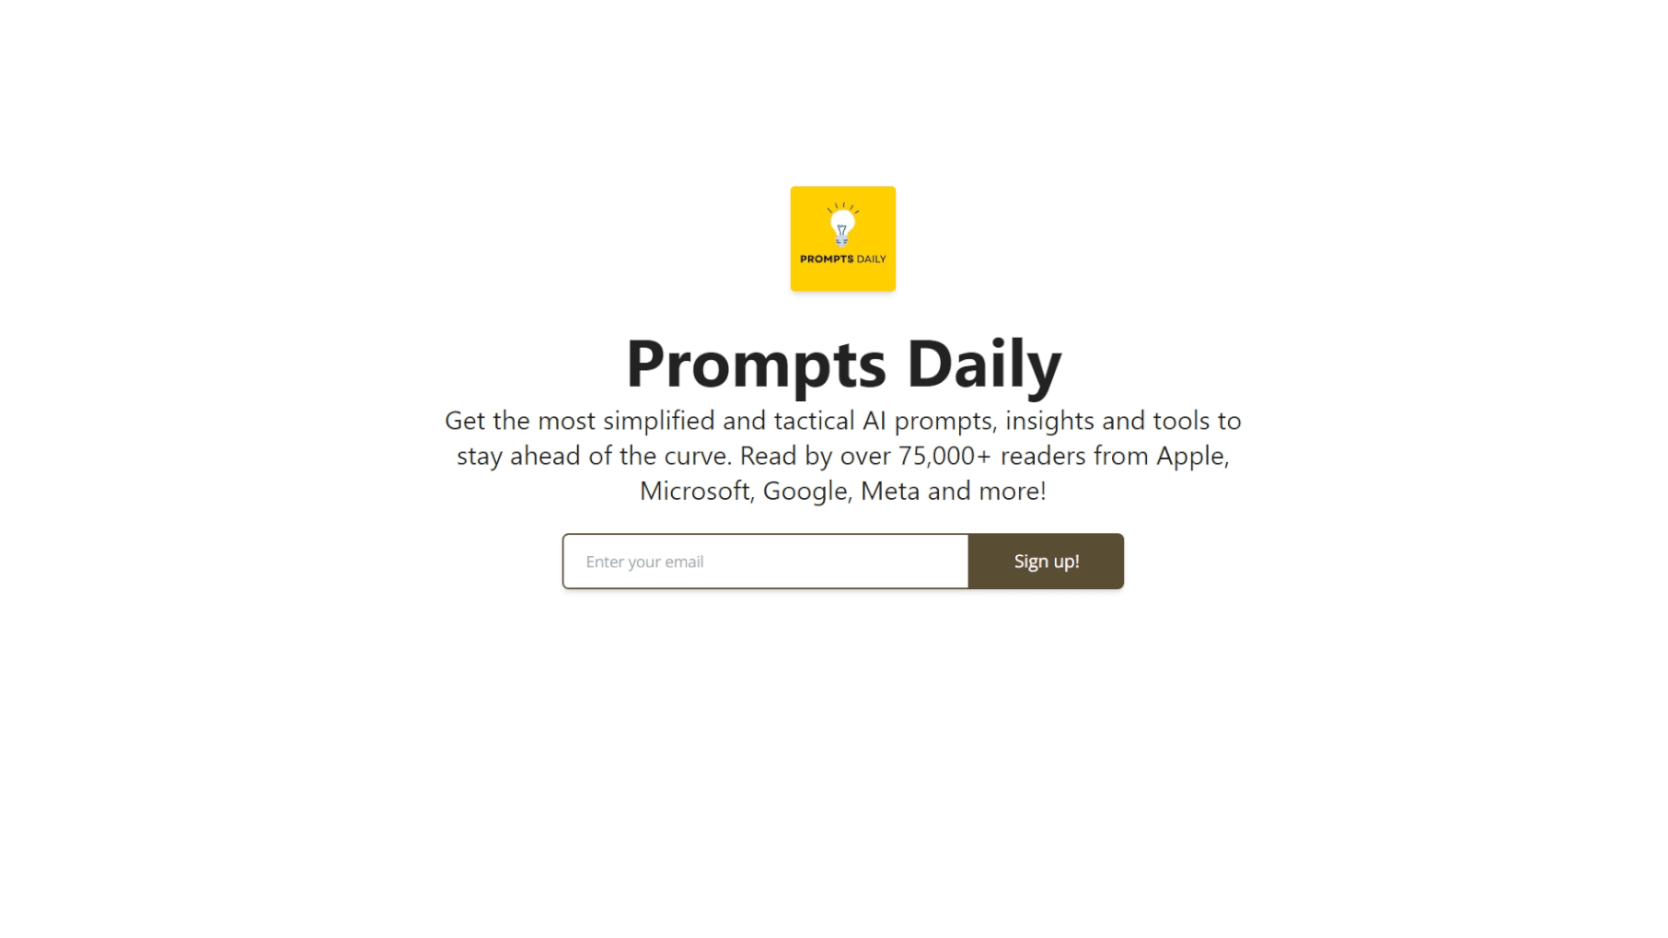 KI-Newsletter: Prompts Daily